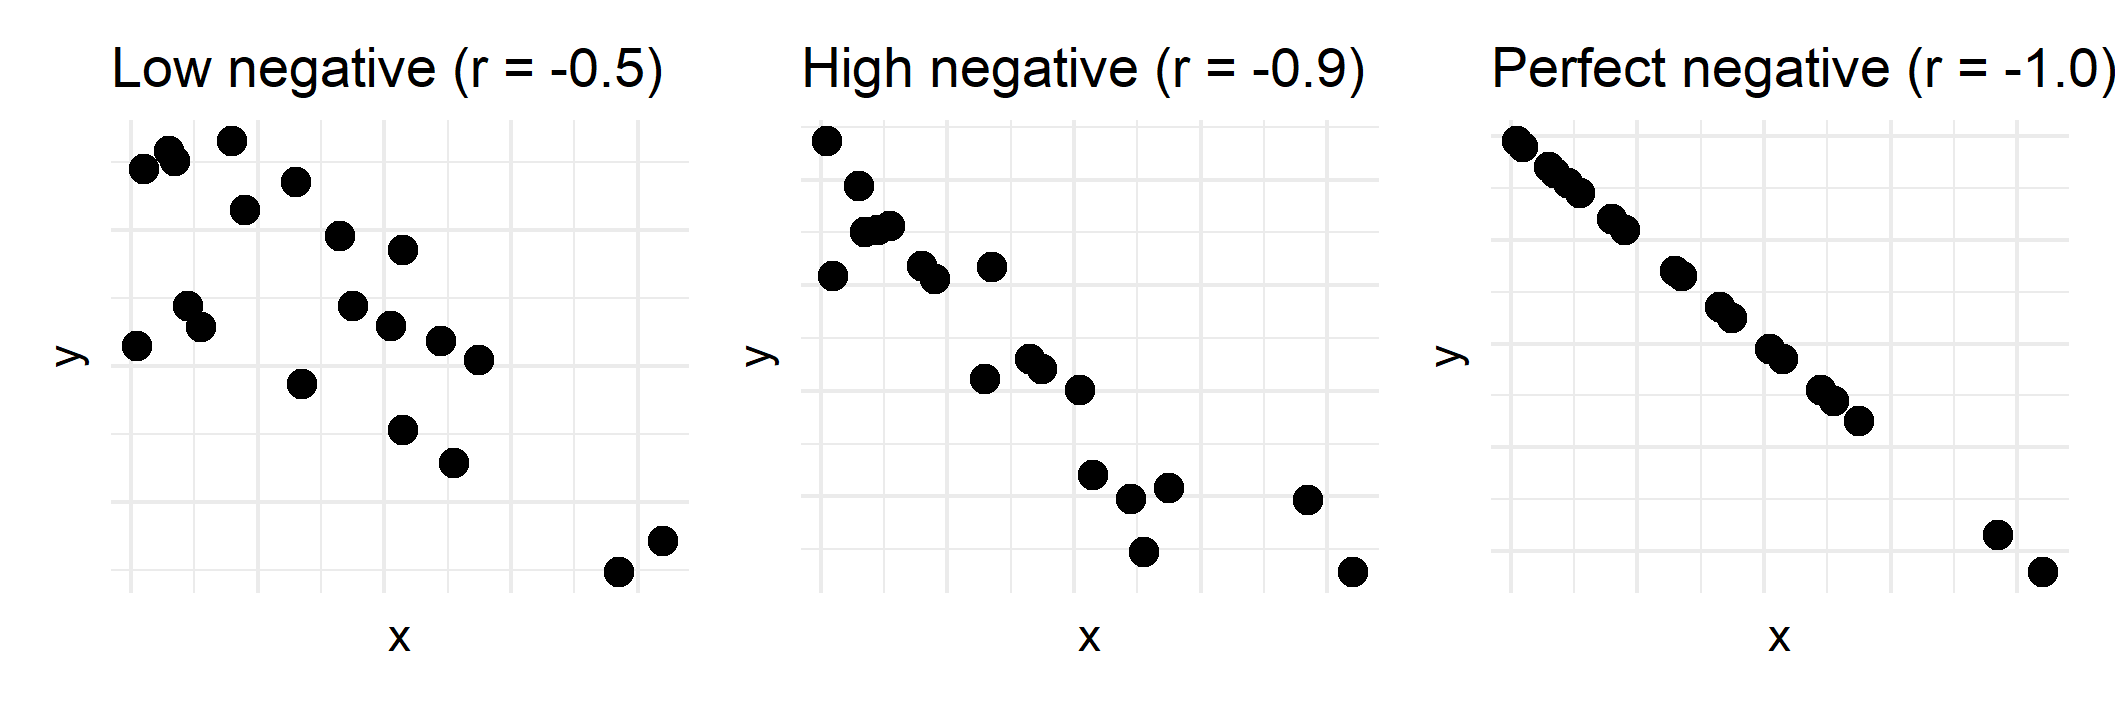 negative_plots-2